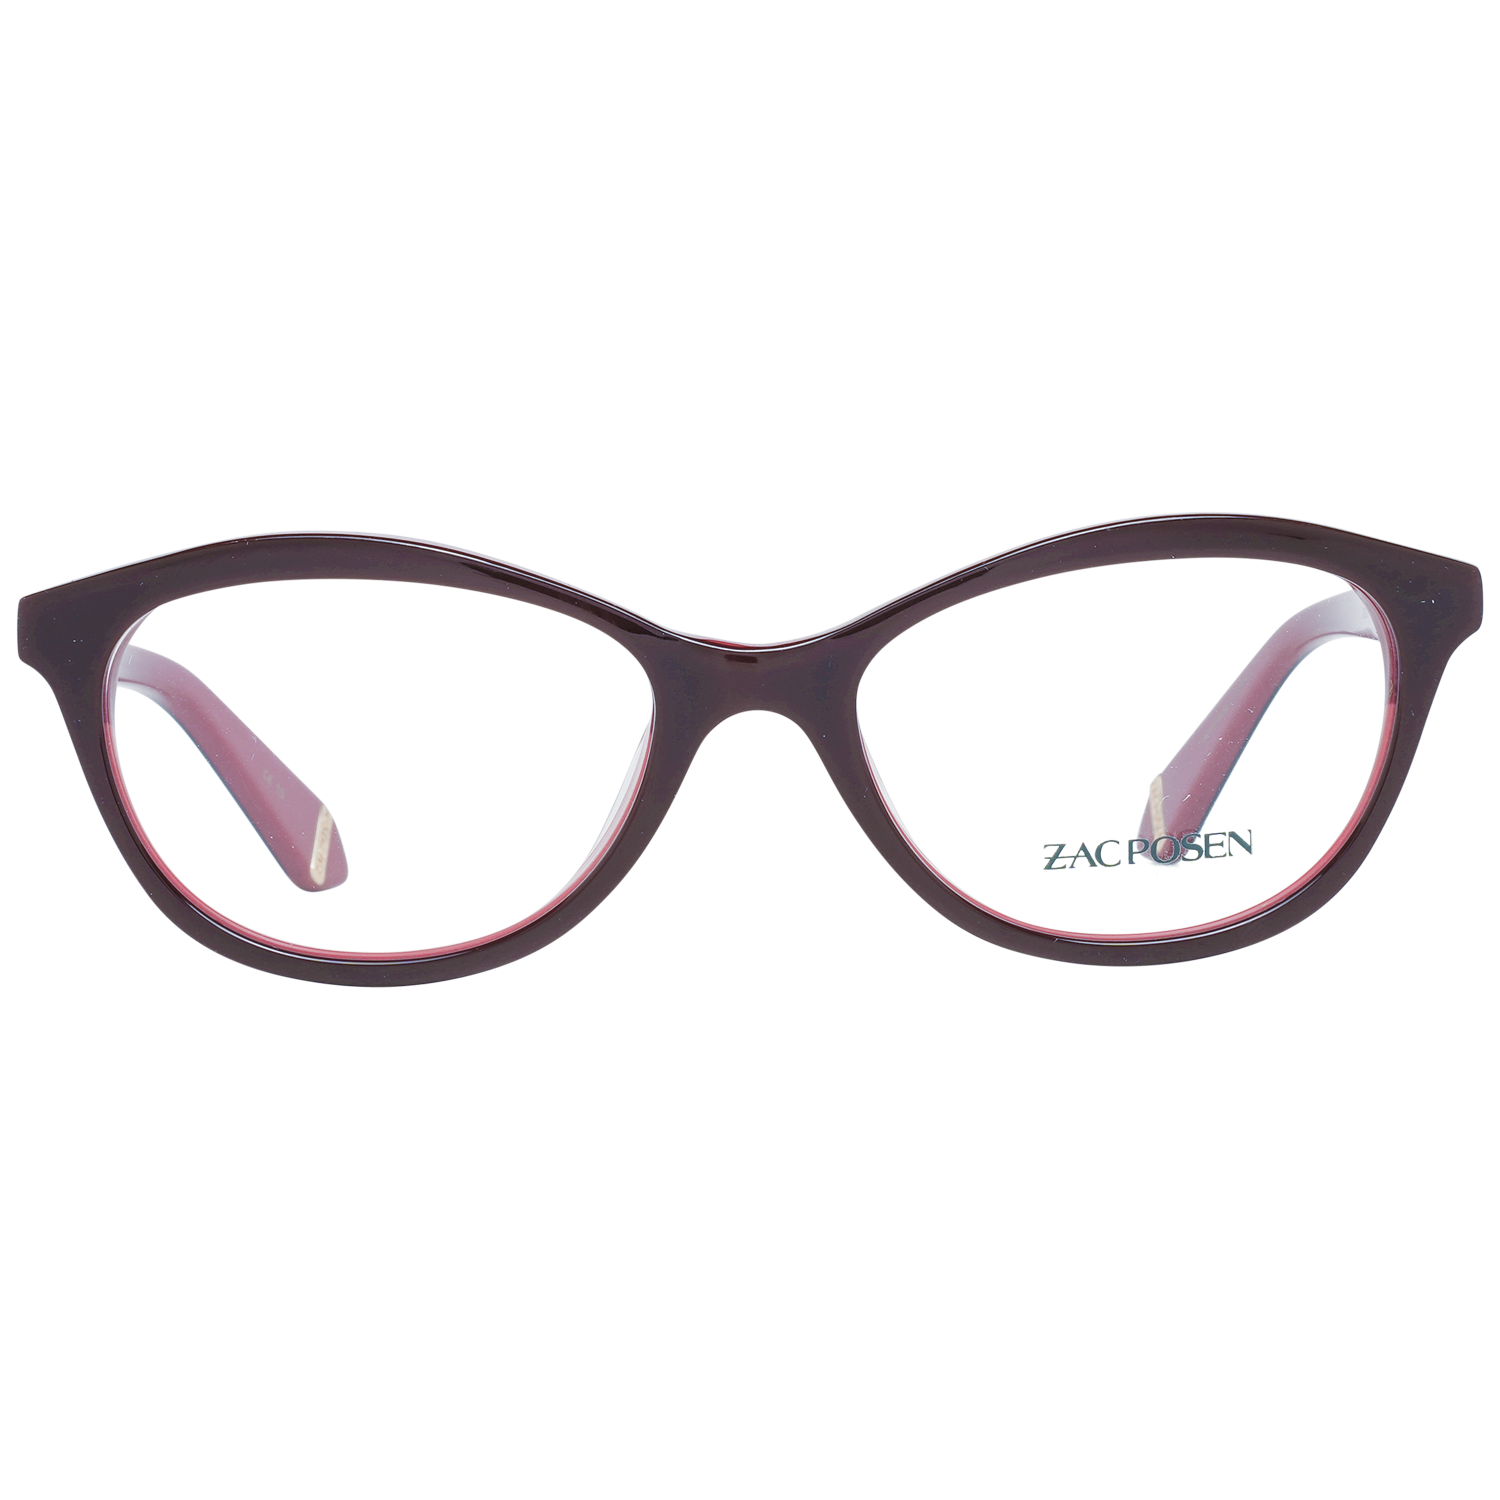 Zac Posen Frames Zac Posen Optical Frame ZIRE BE 50 Irene Eyeglasses Eyewear UK USA Australia 